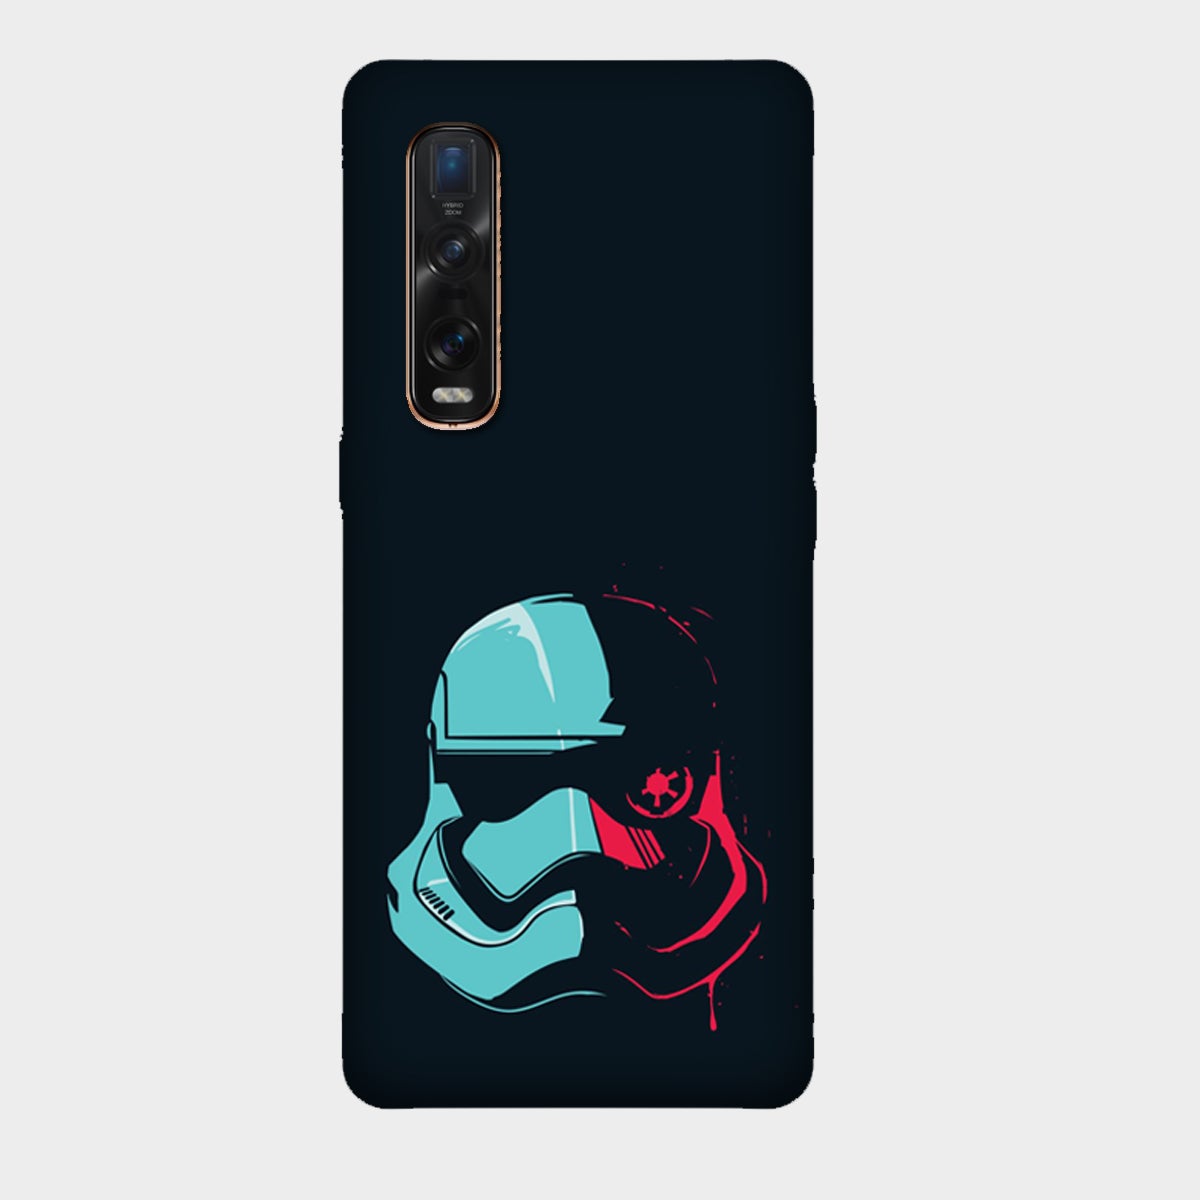 Star Wars - Darth Vader - Multi Color - Mobile Phone Cover - Hard Case